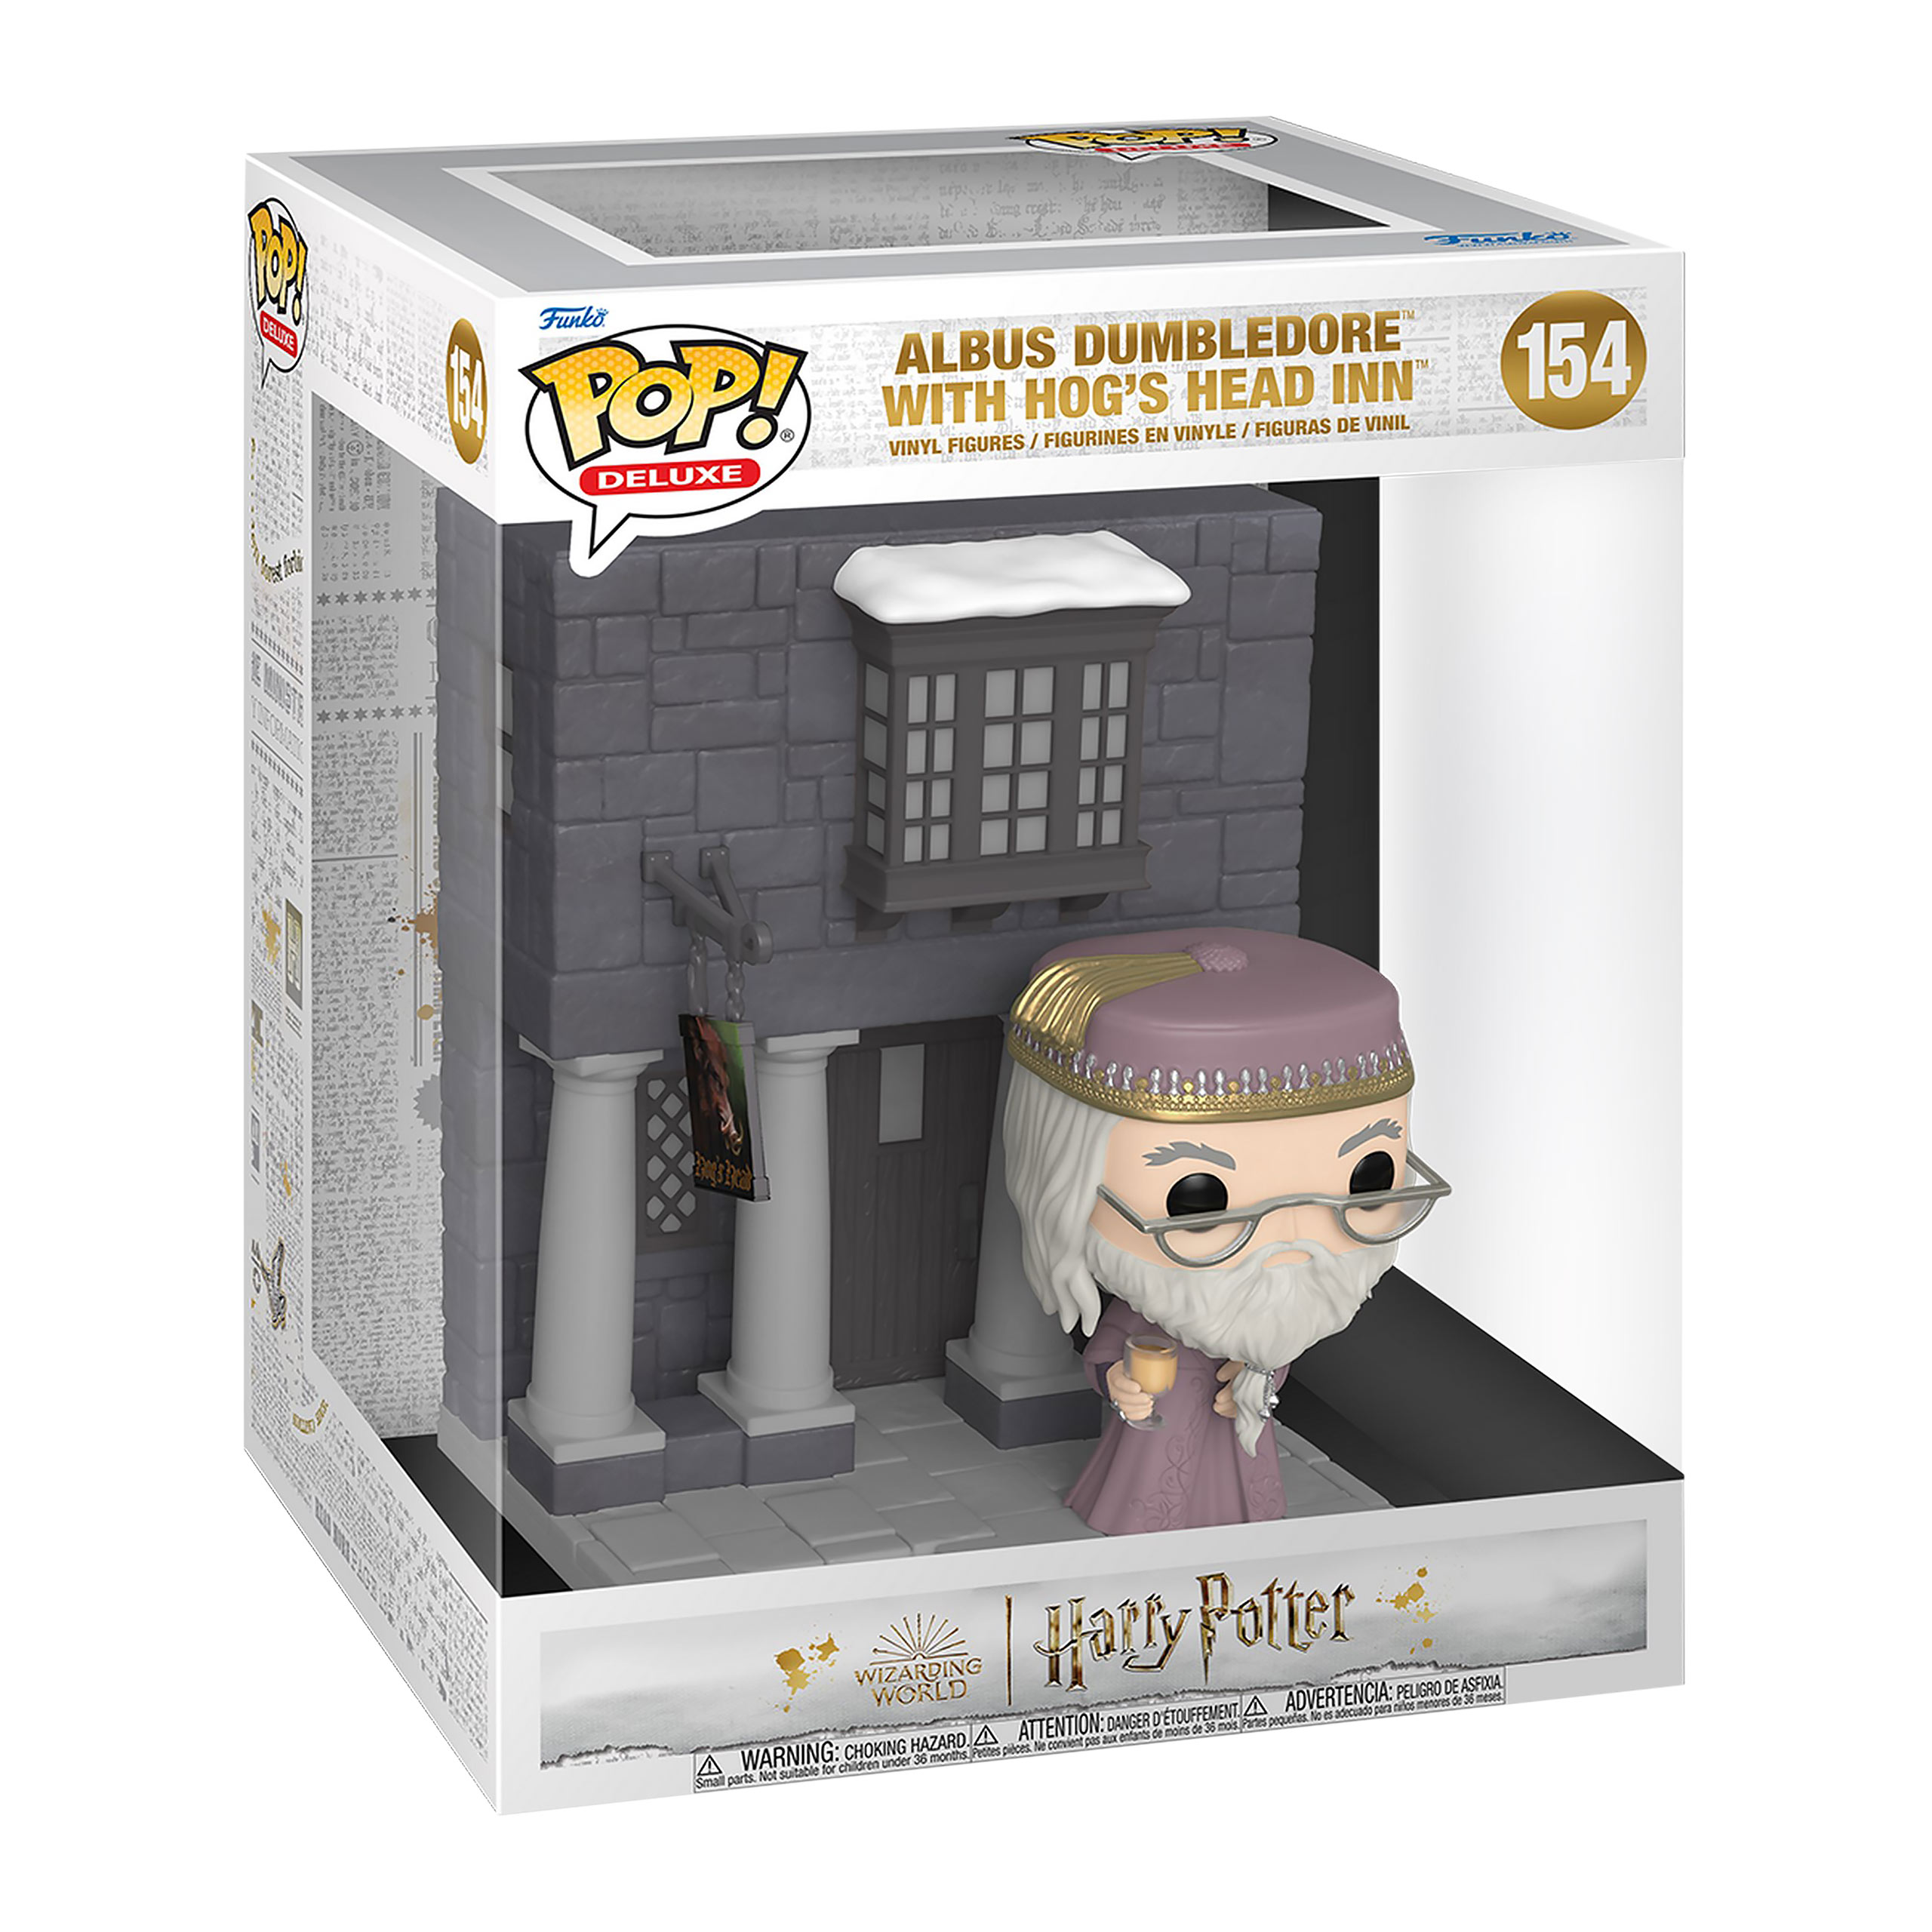 Albus Dumbledore in Hogsmeade Funko Pop Diorama Figur - Harry Potter